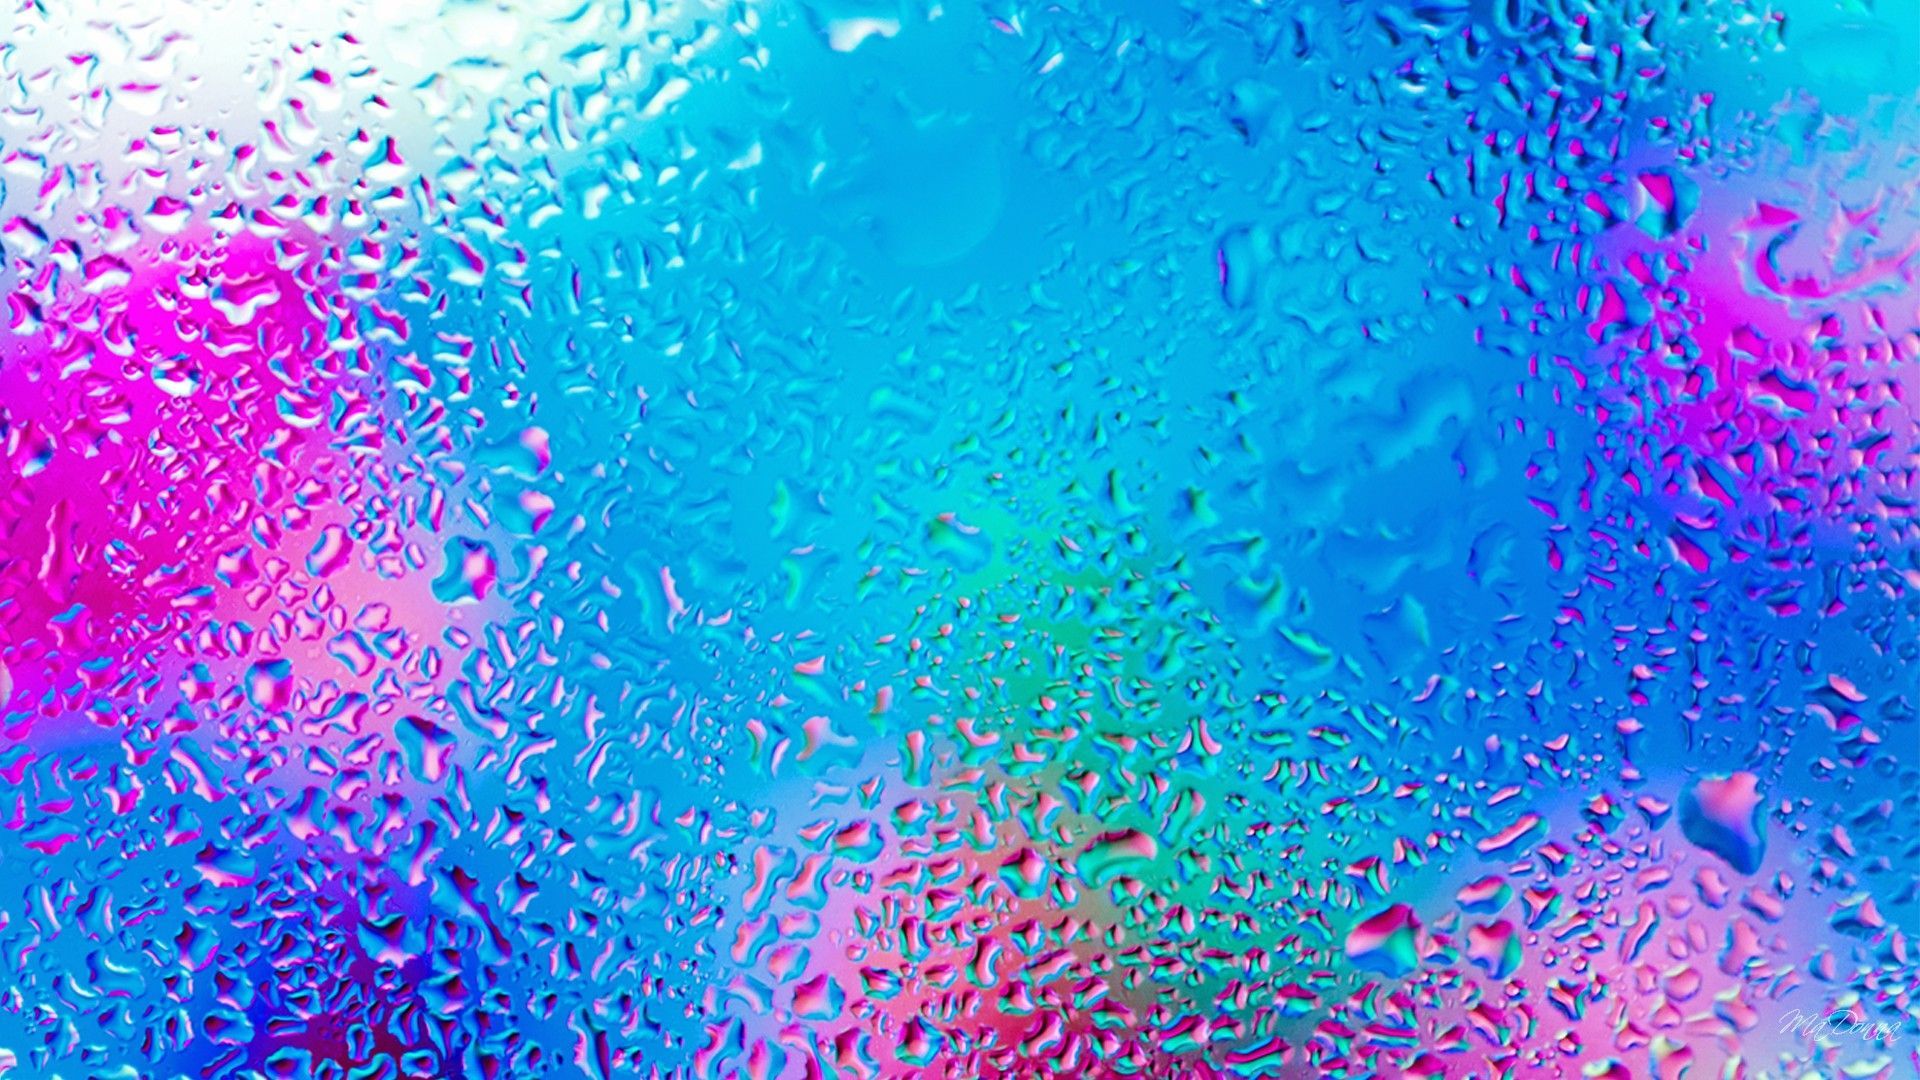 Waterdrops bright hd wallpaper 507074